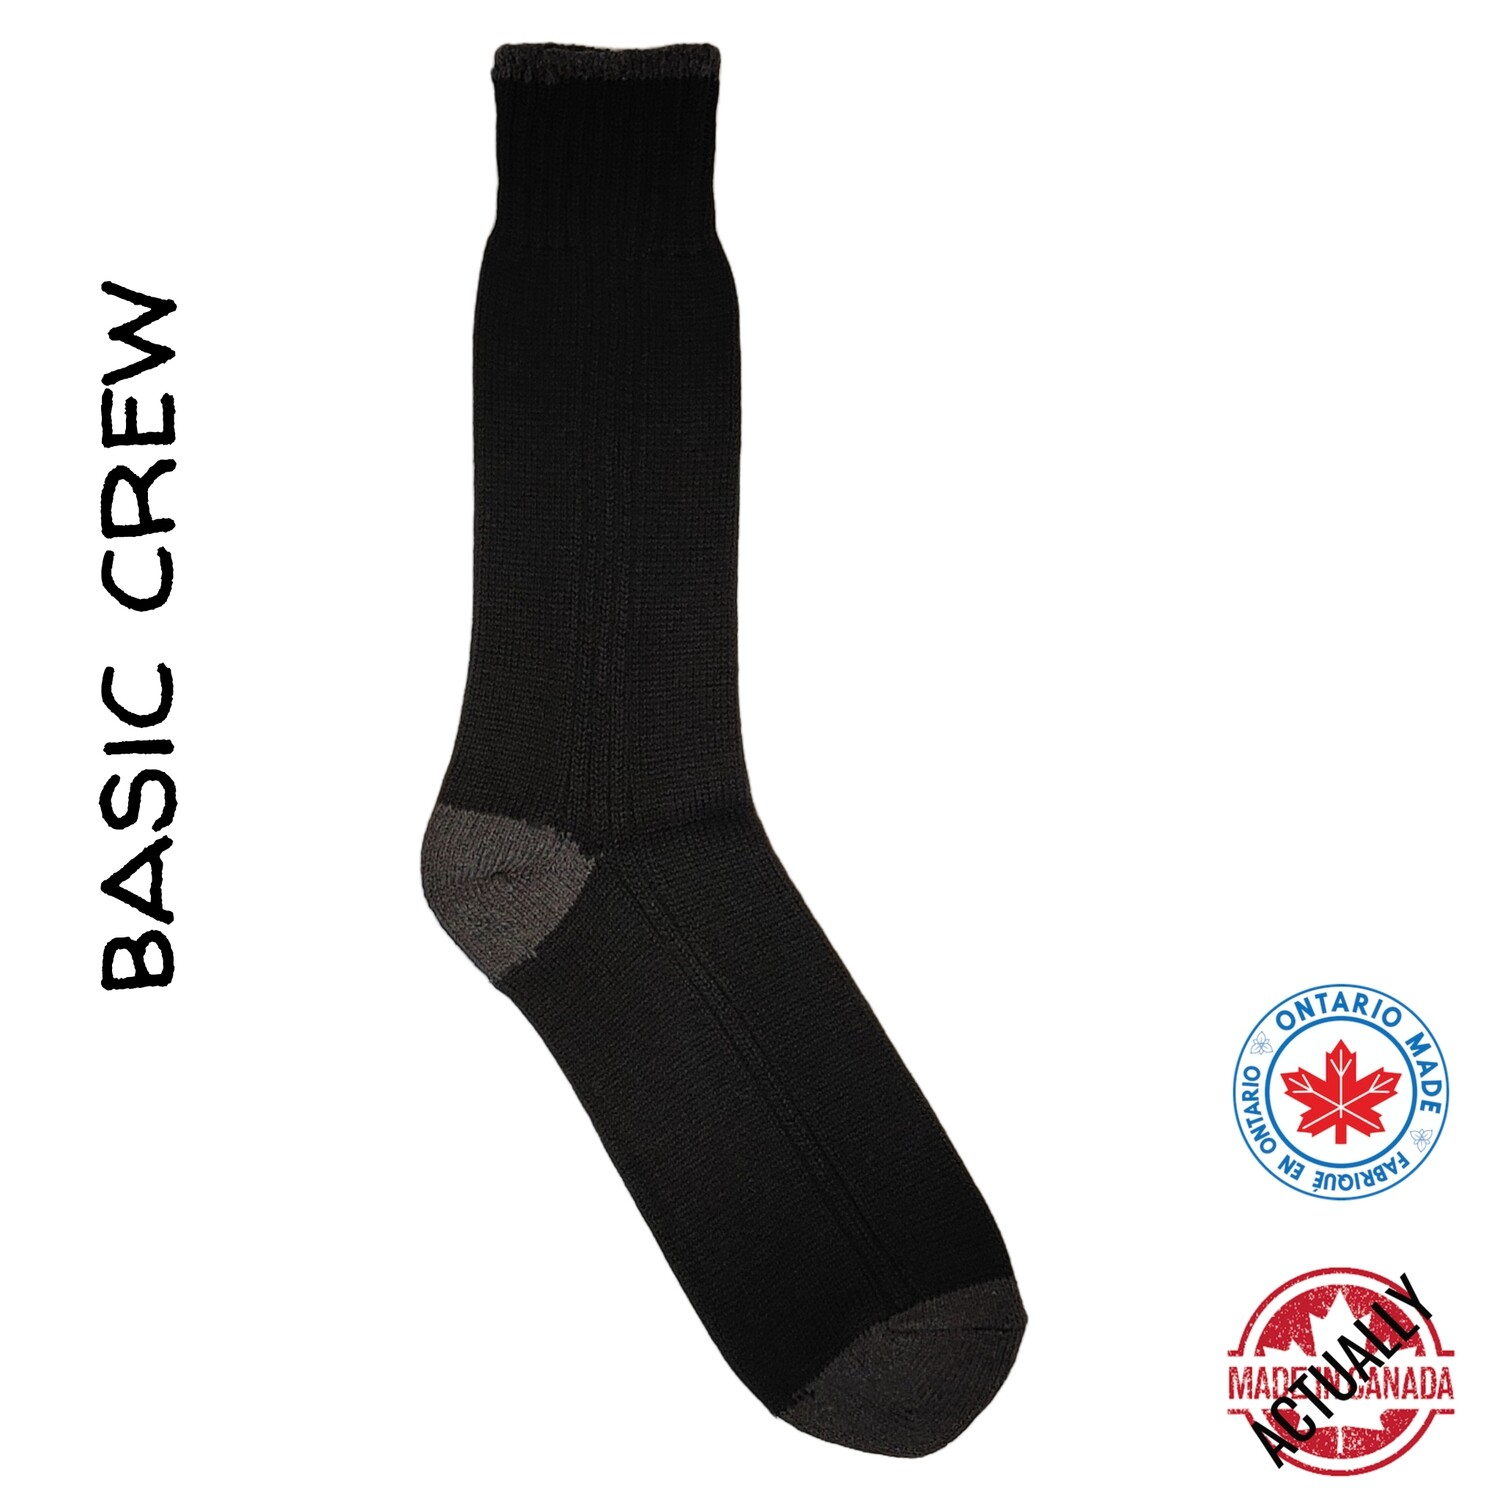 Basic Single Rib Crew Socks - Black/Charcoal